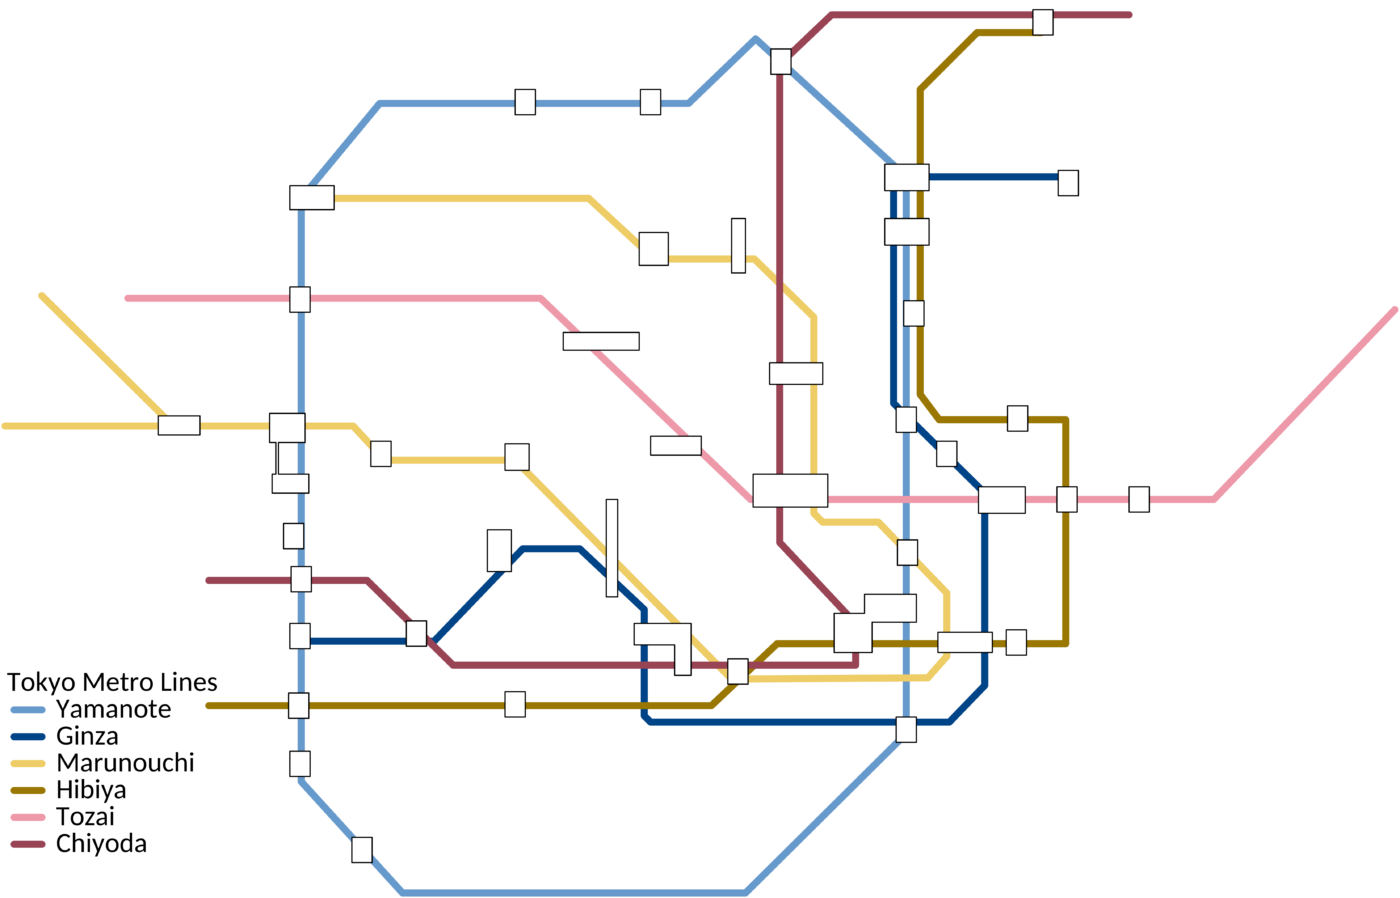 Tokyo metro in medium-contrast scheme